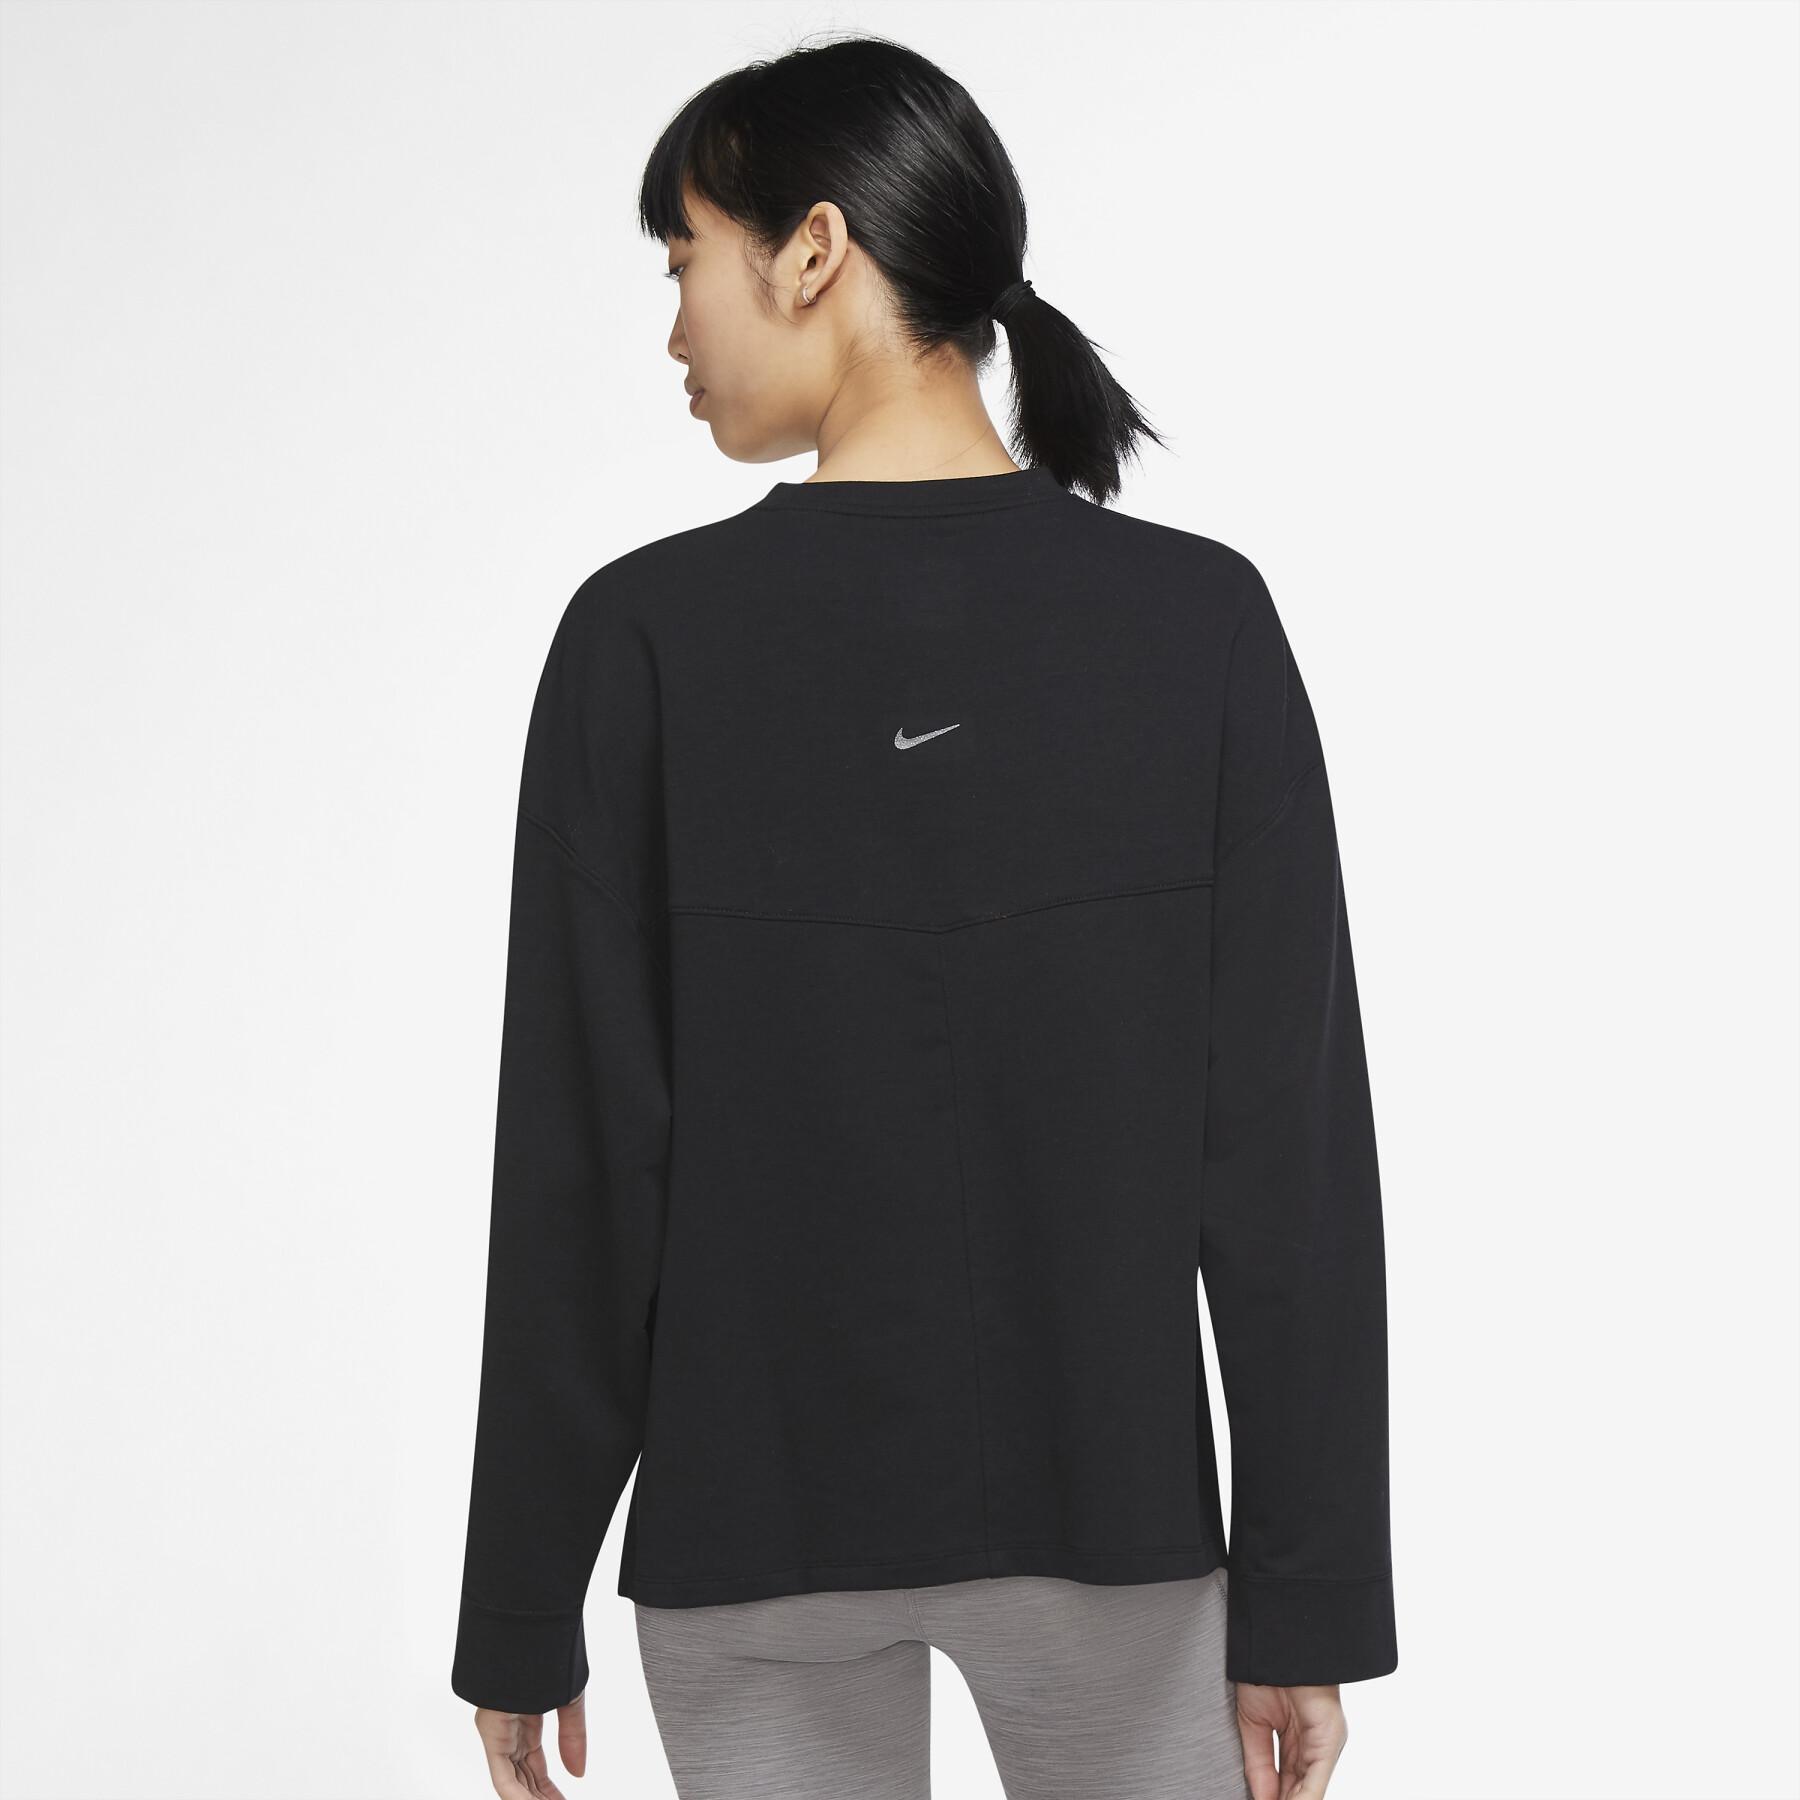 Sweatshirt round neck woman Nike Dri-Fit FLC - Women's clothing - Fitness